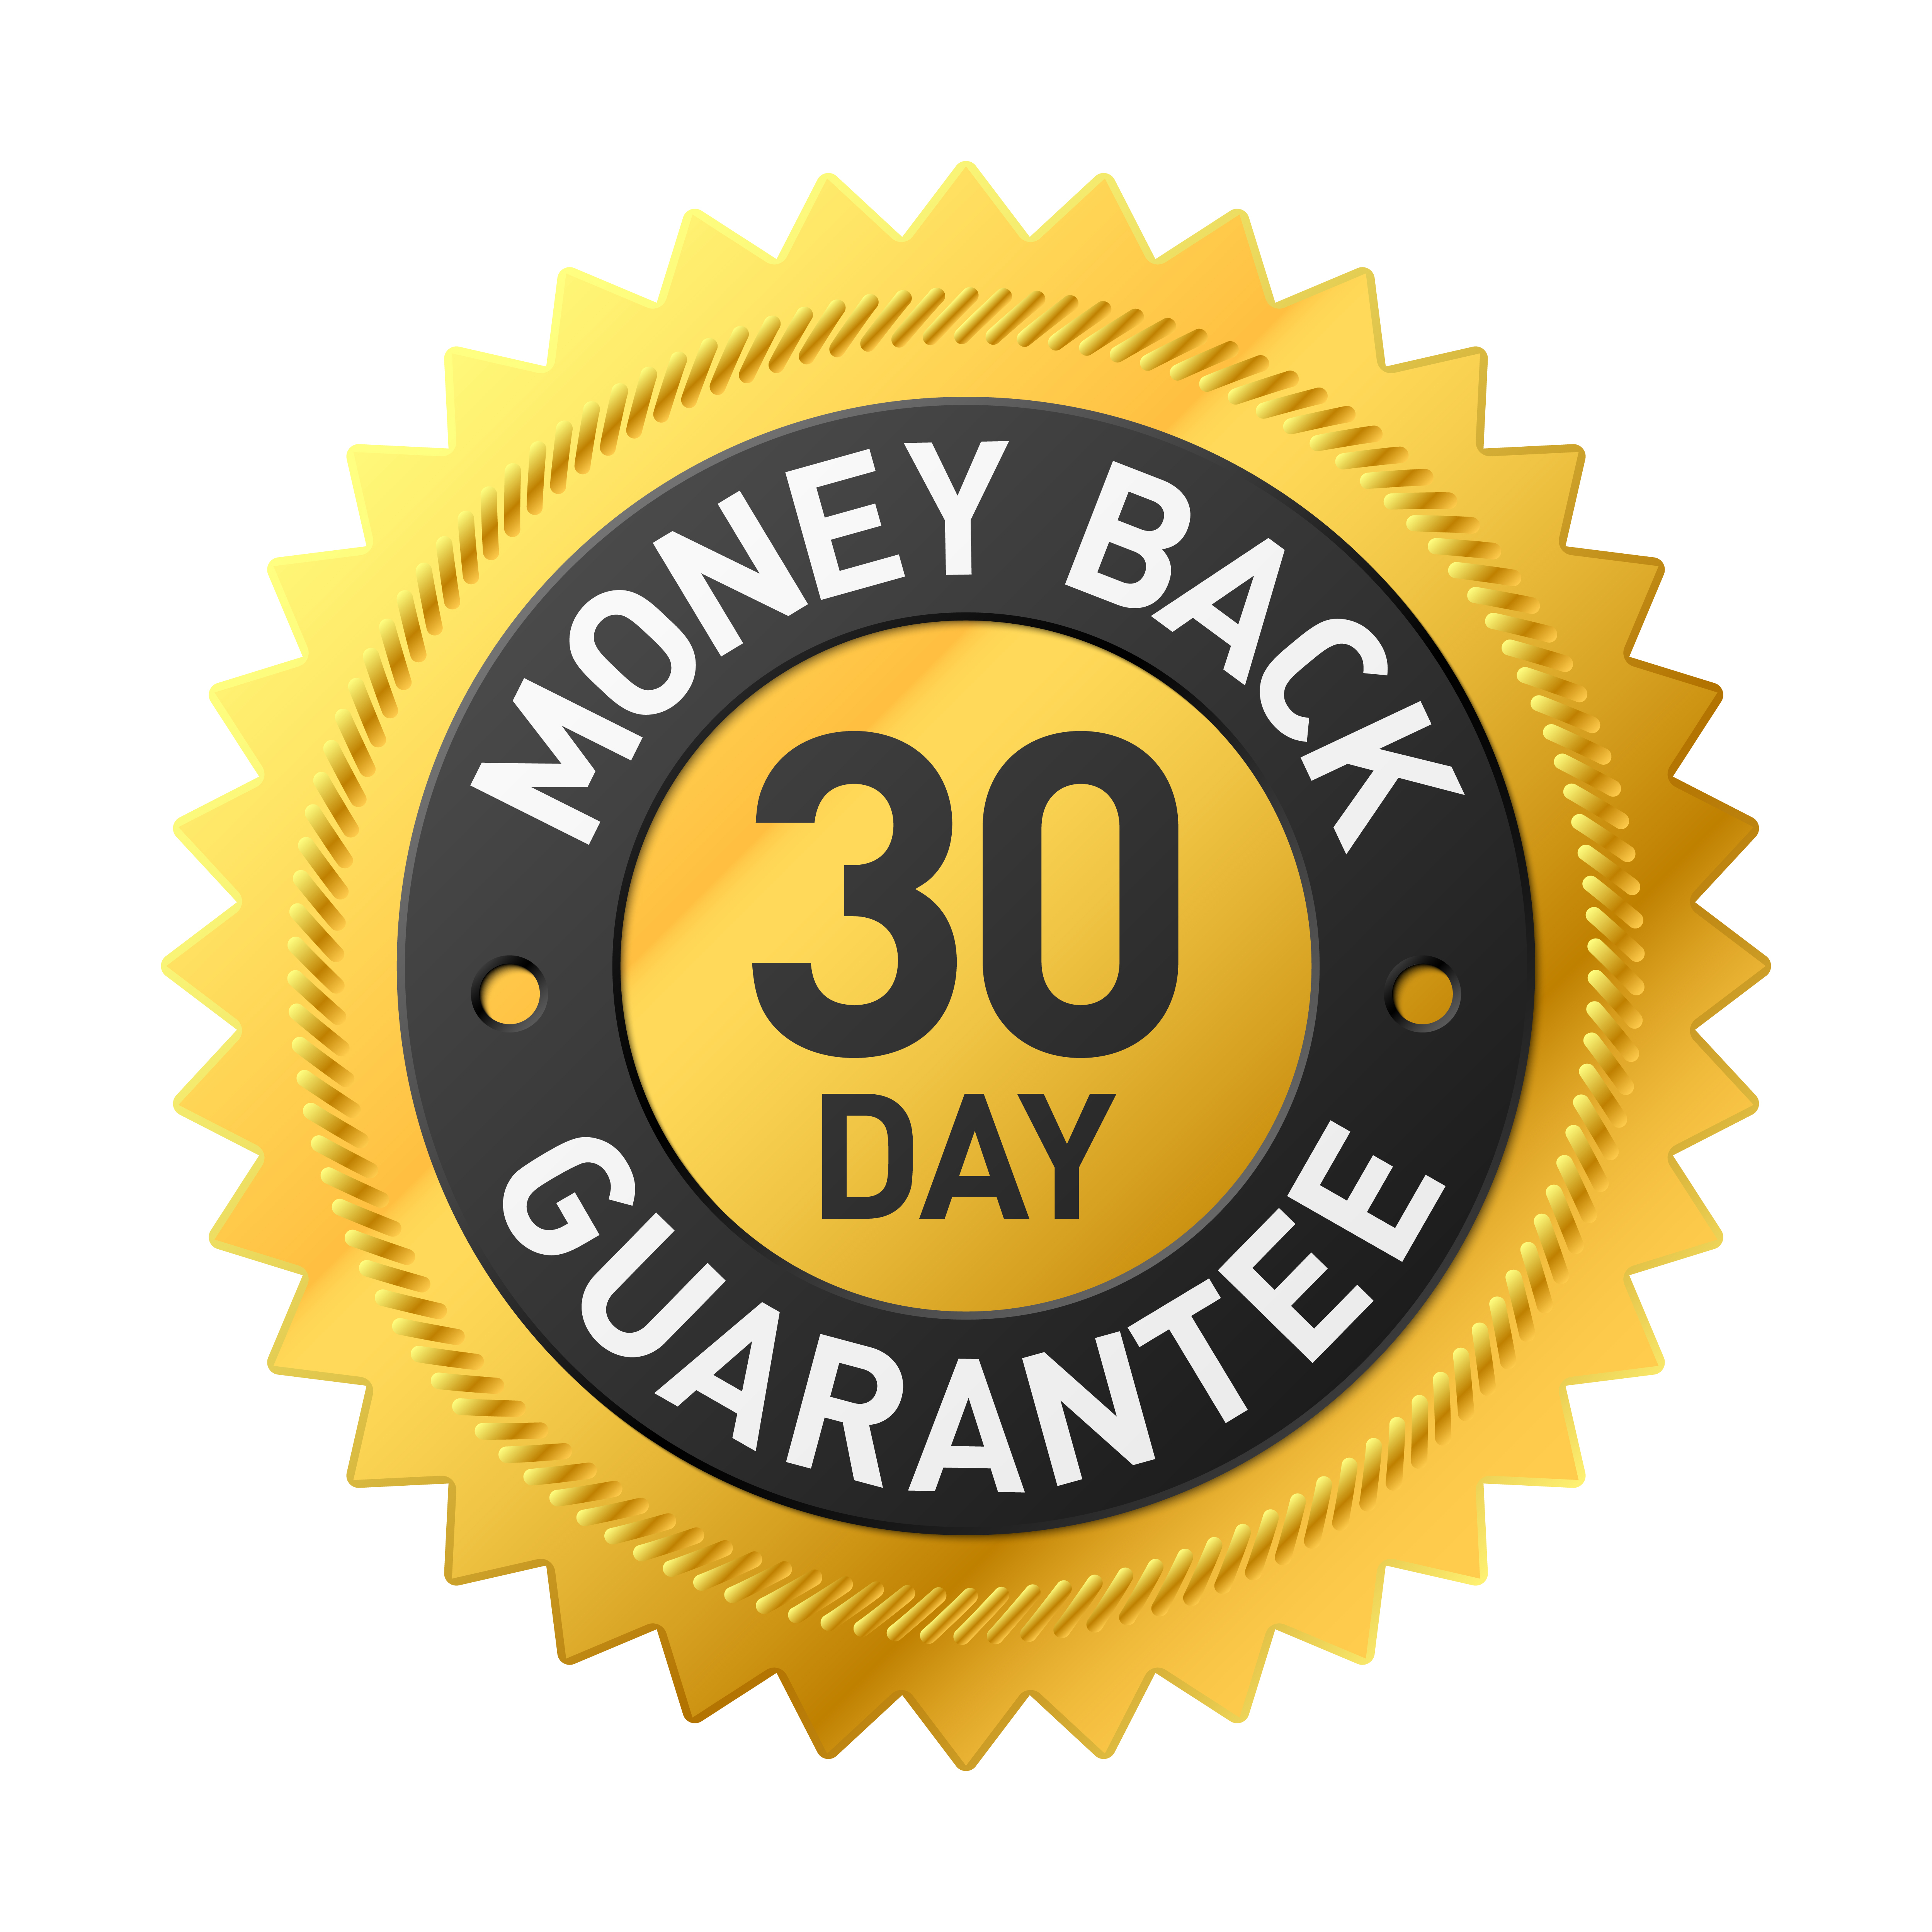 100% Money-Back Guarantee